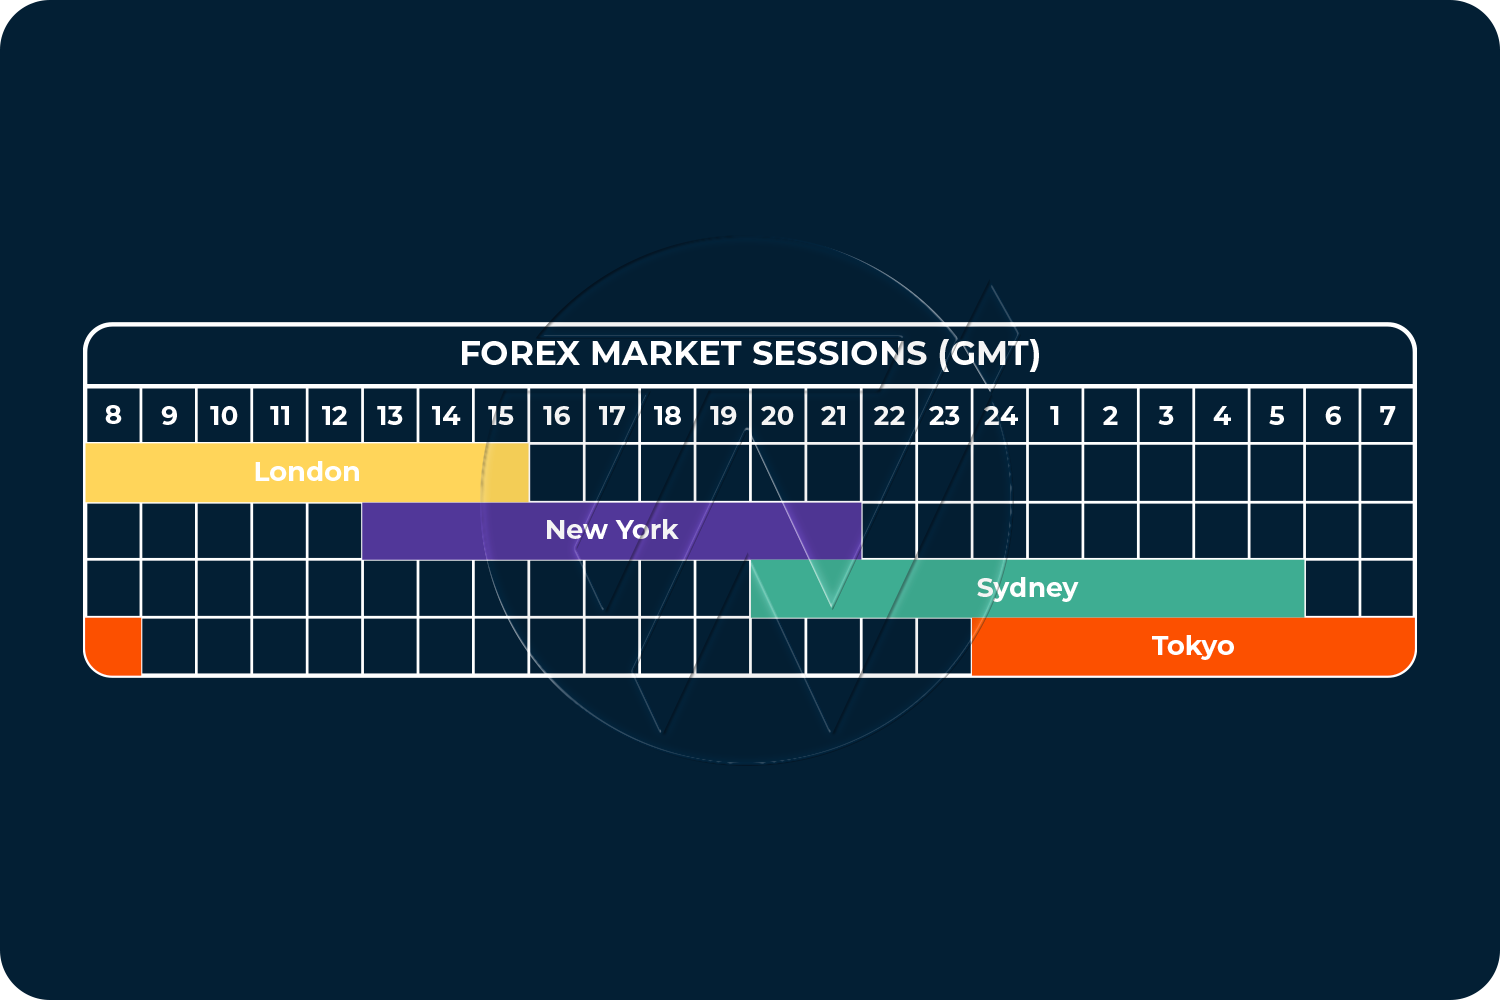 5. Factors Affecting Forex Market Movements